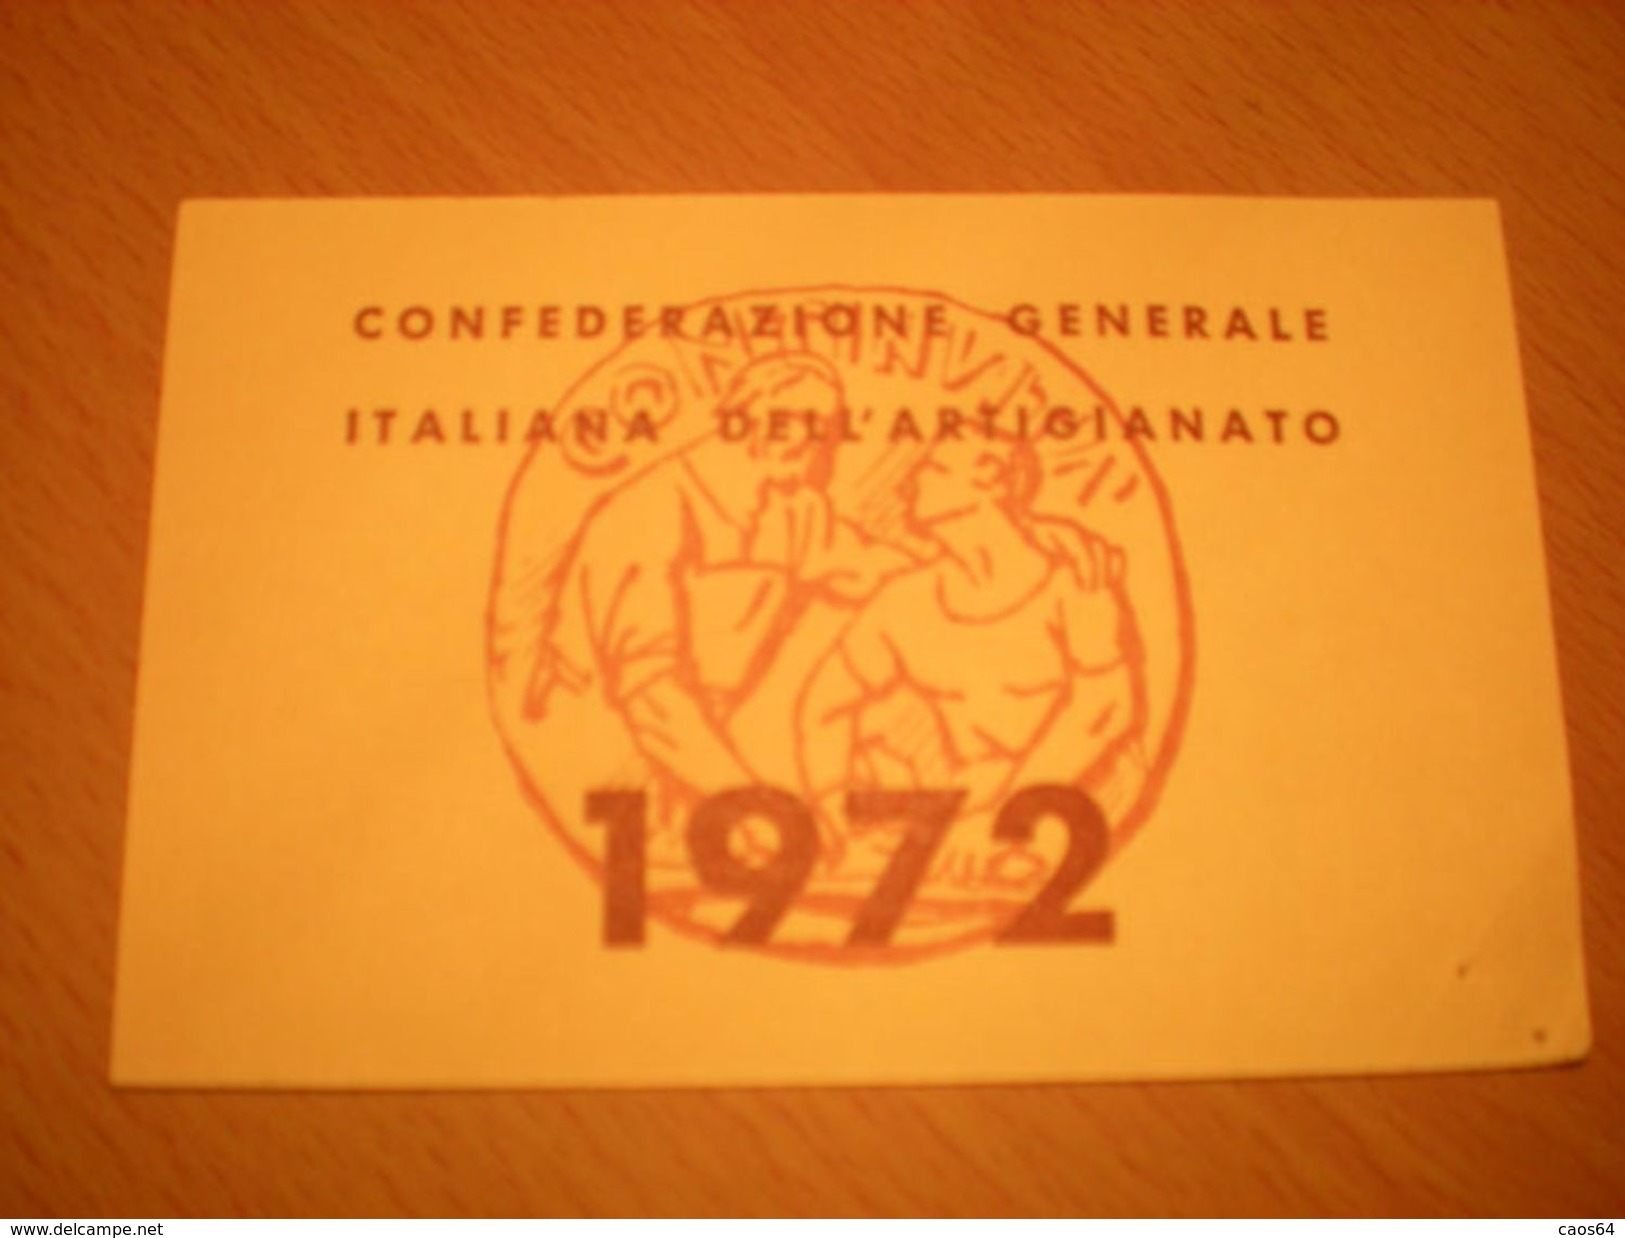 TESSERA CONFEDERAZIONE GENERALE ITALIANA DELL'ARTIGIANATO 1972 - Lidmaatschapskaarten